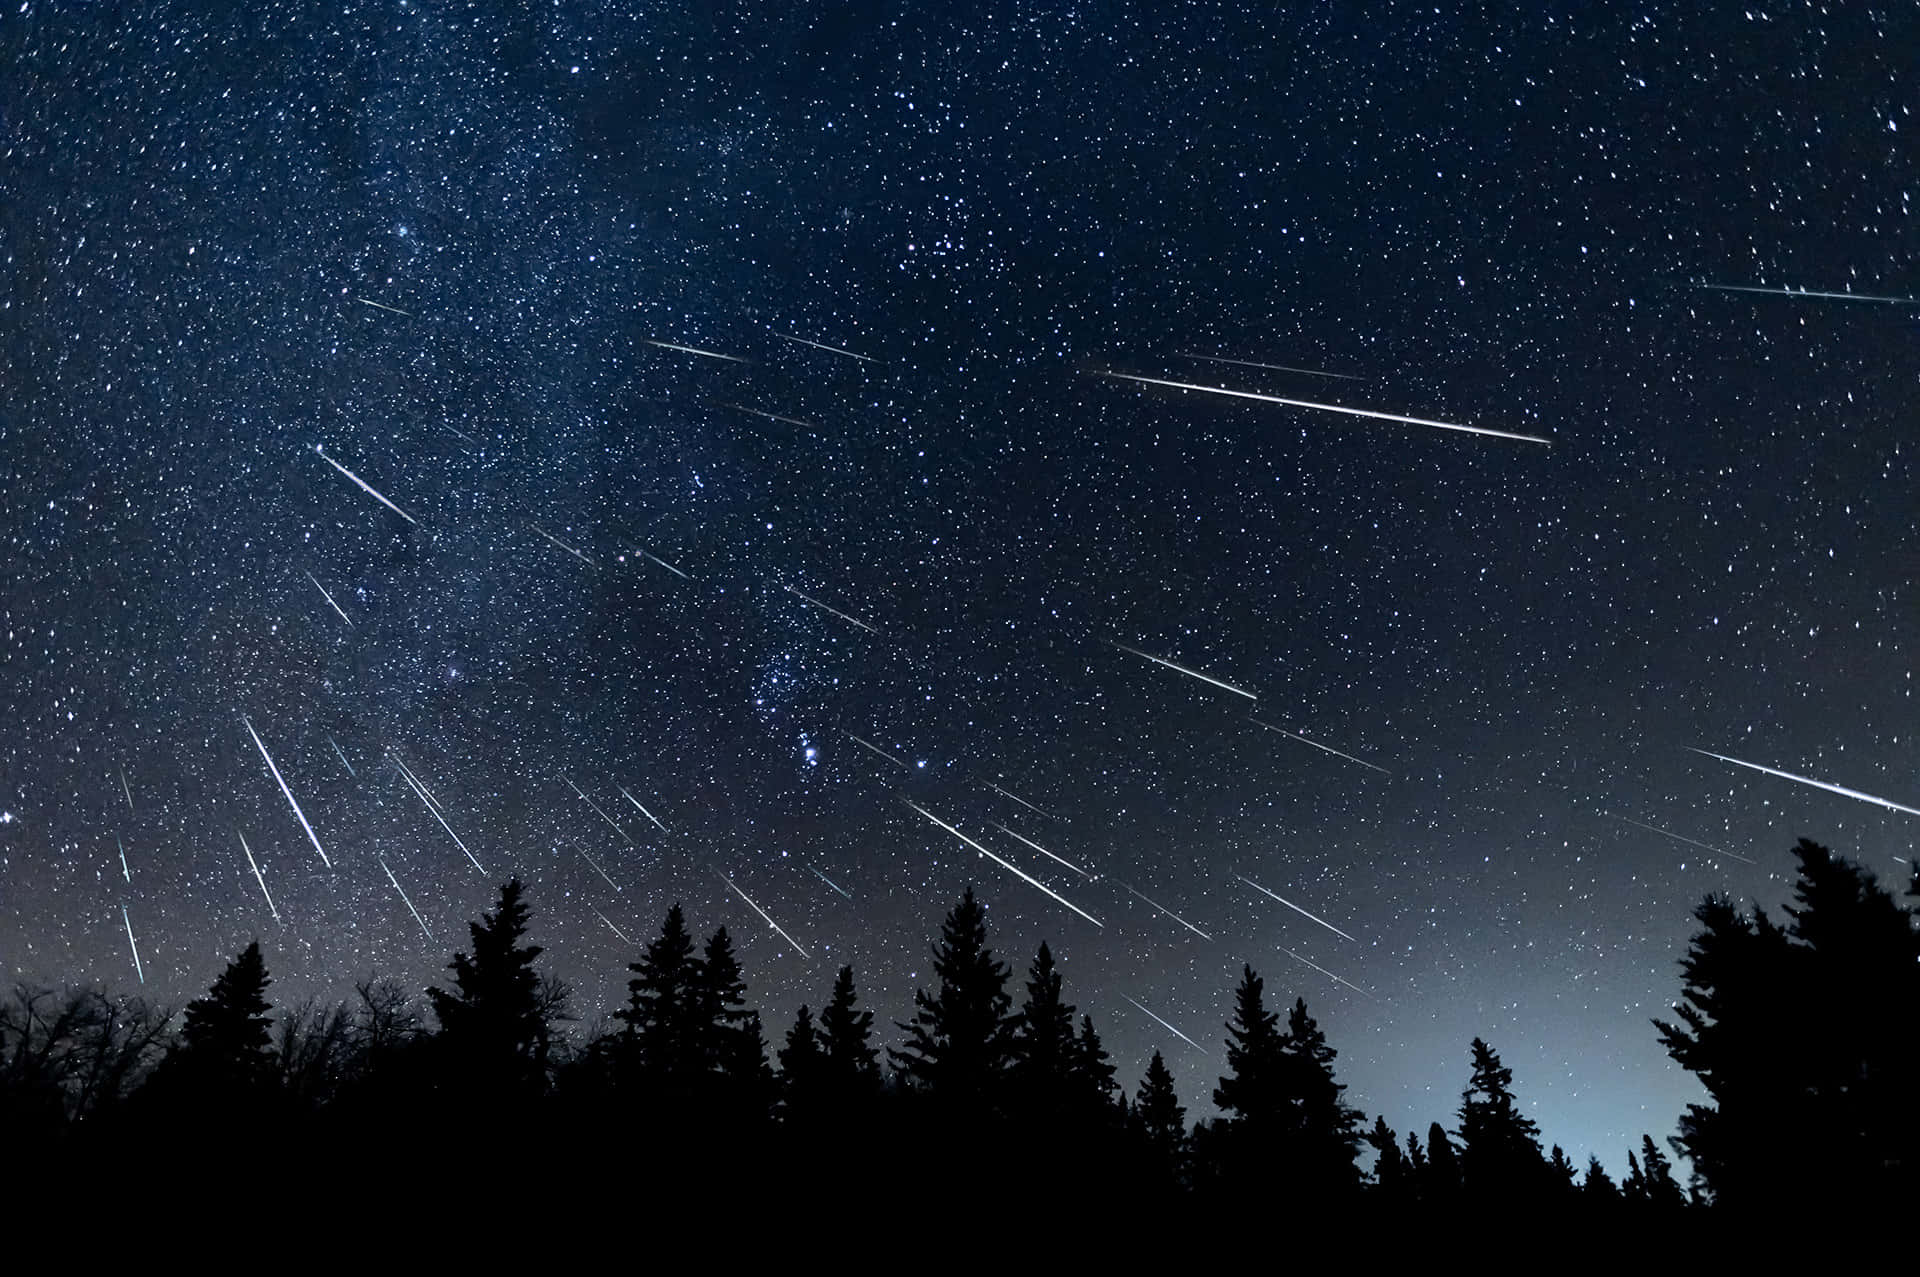 A brilliant meteor streaks across a cloudy night sky